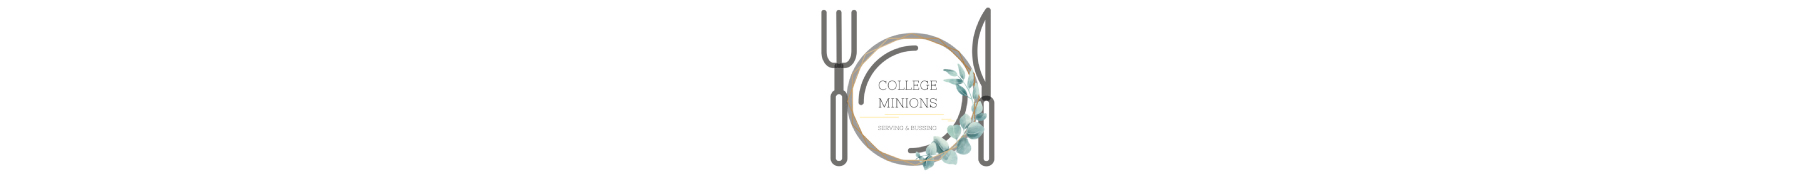 College Minions Servers LLC - Header